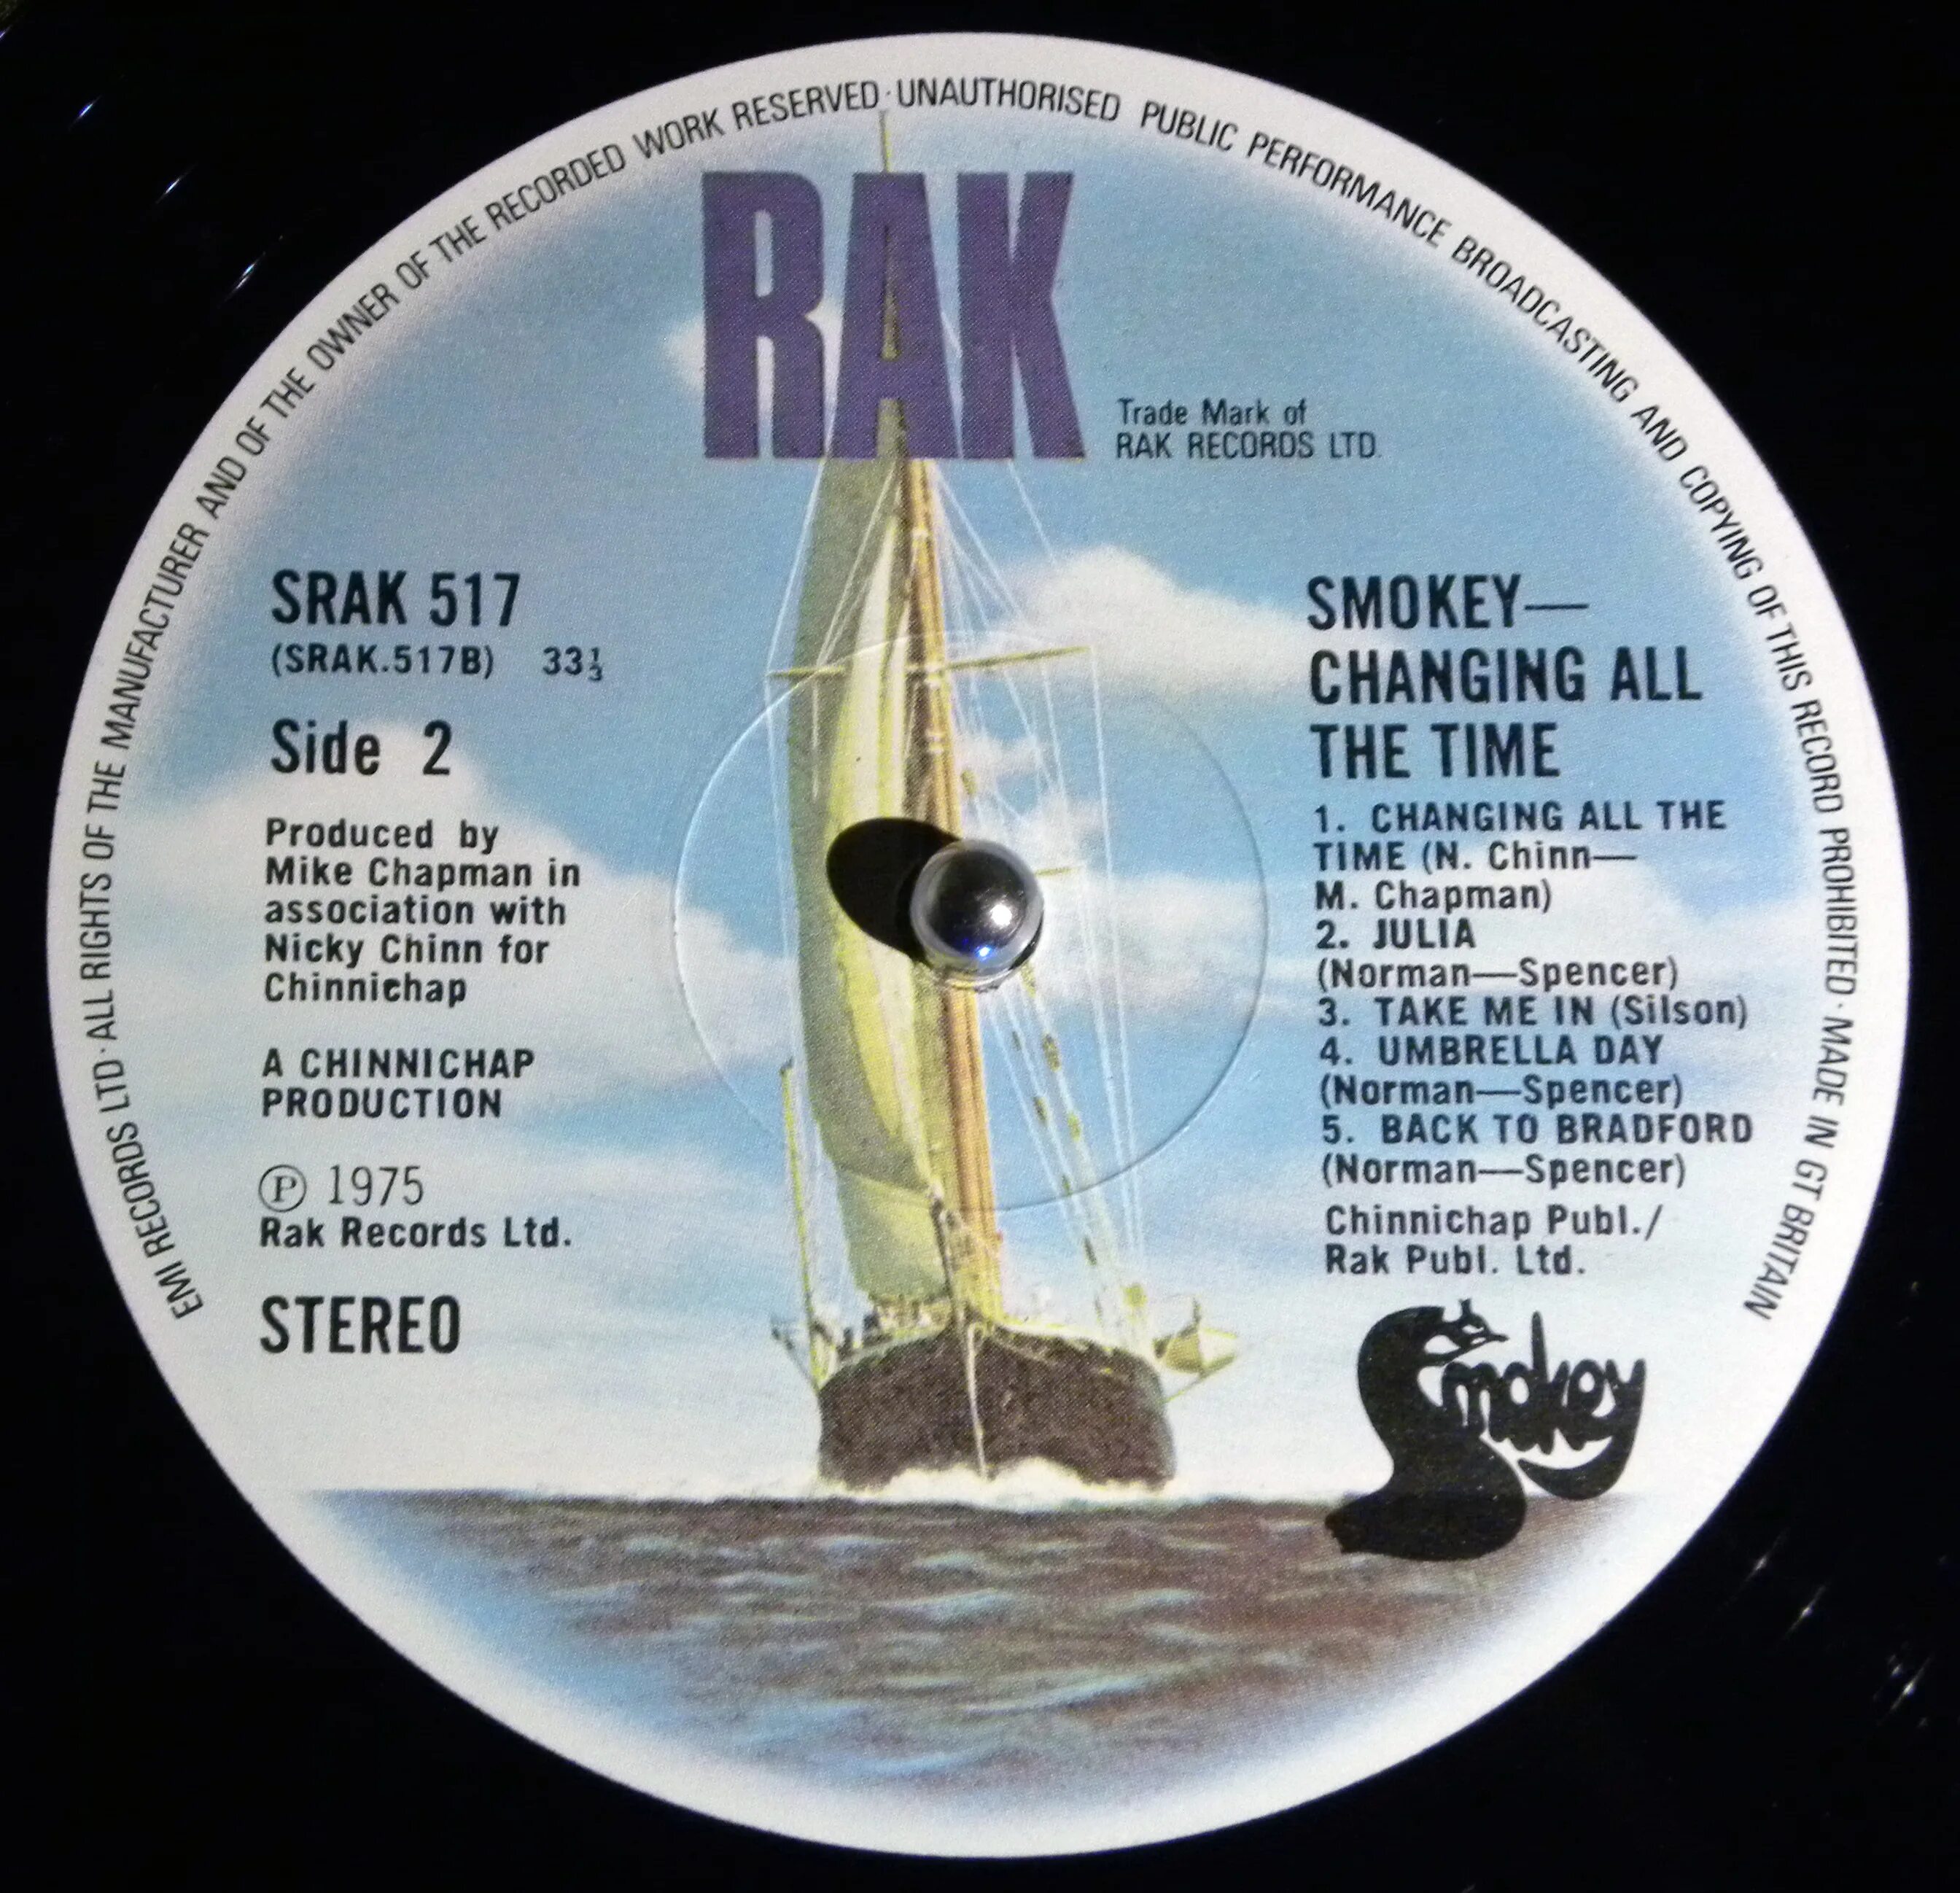 Smokie "Montreux album". Smokie changing all the time 1975. Smokie Pass it around 1975. Smokie "changing all the time".